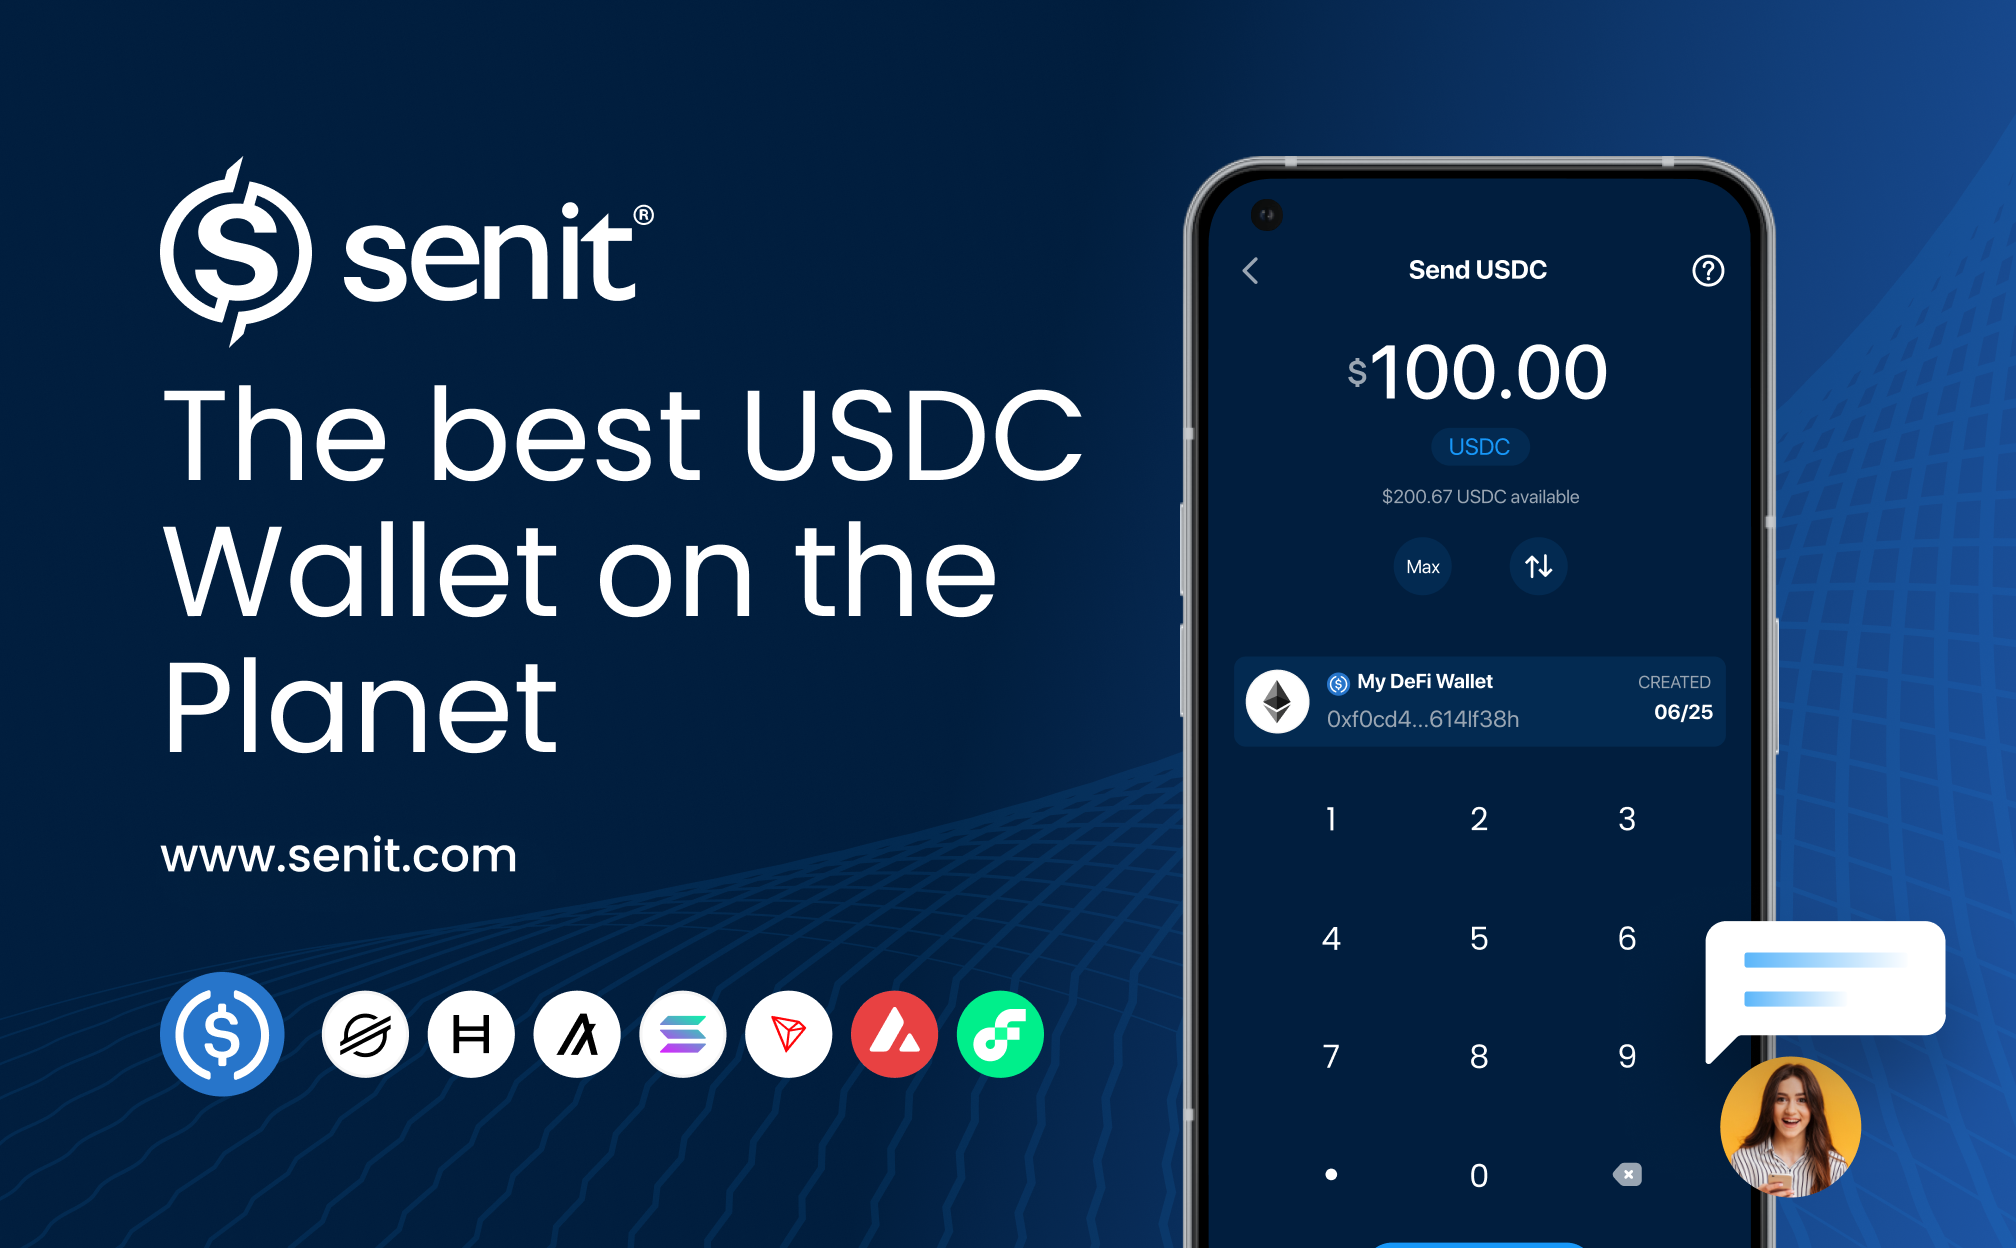 Senit, the best USDC Wallet